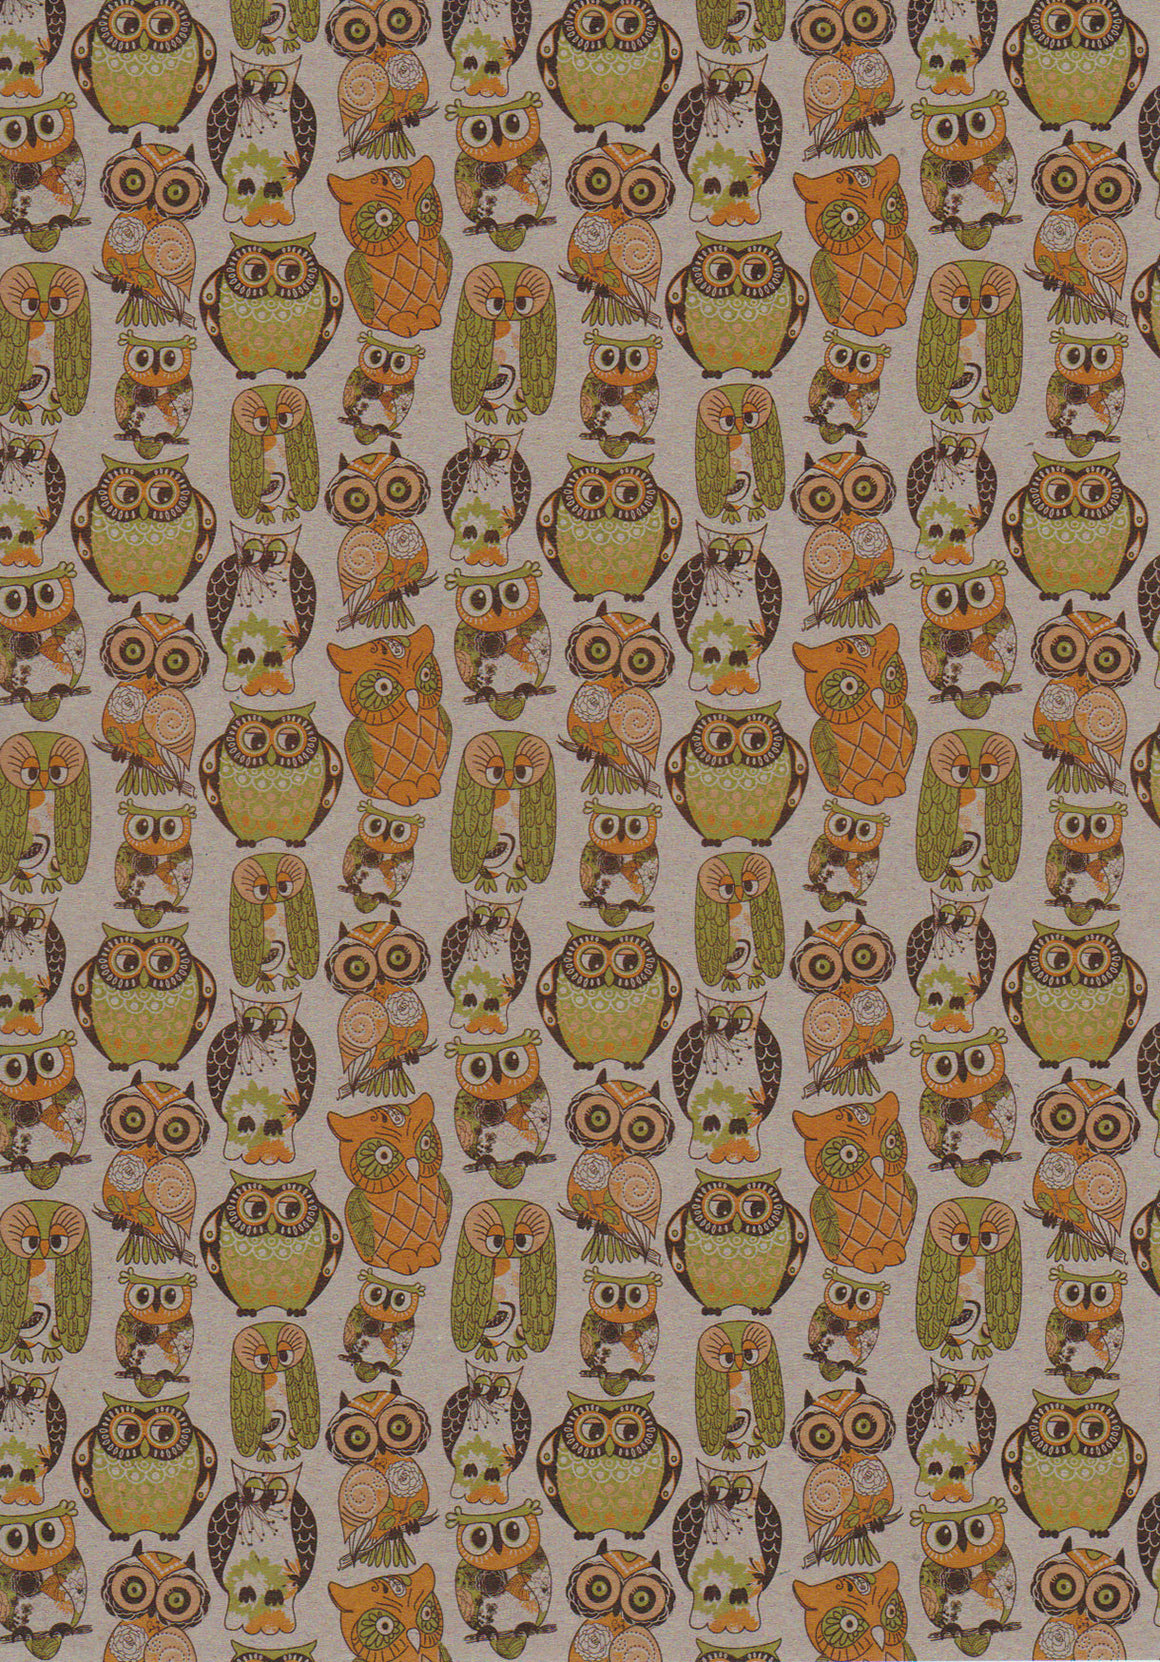 Owl patterns set on botany paper